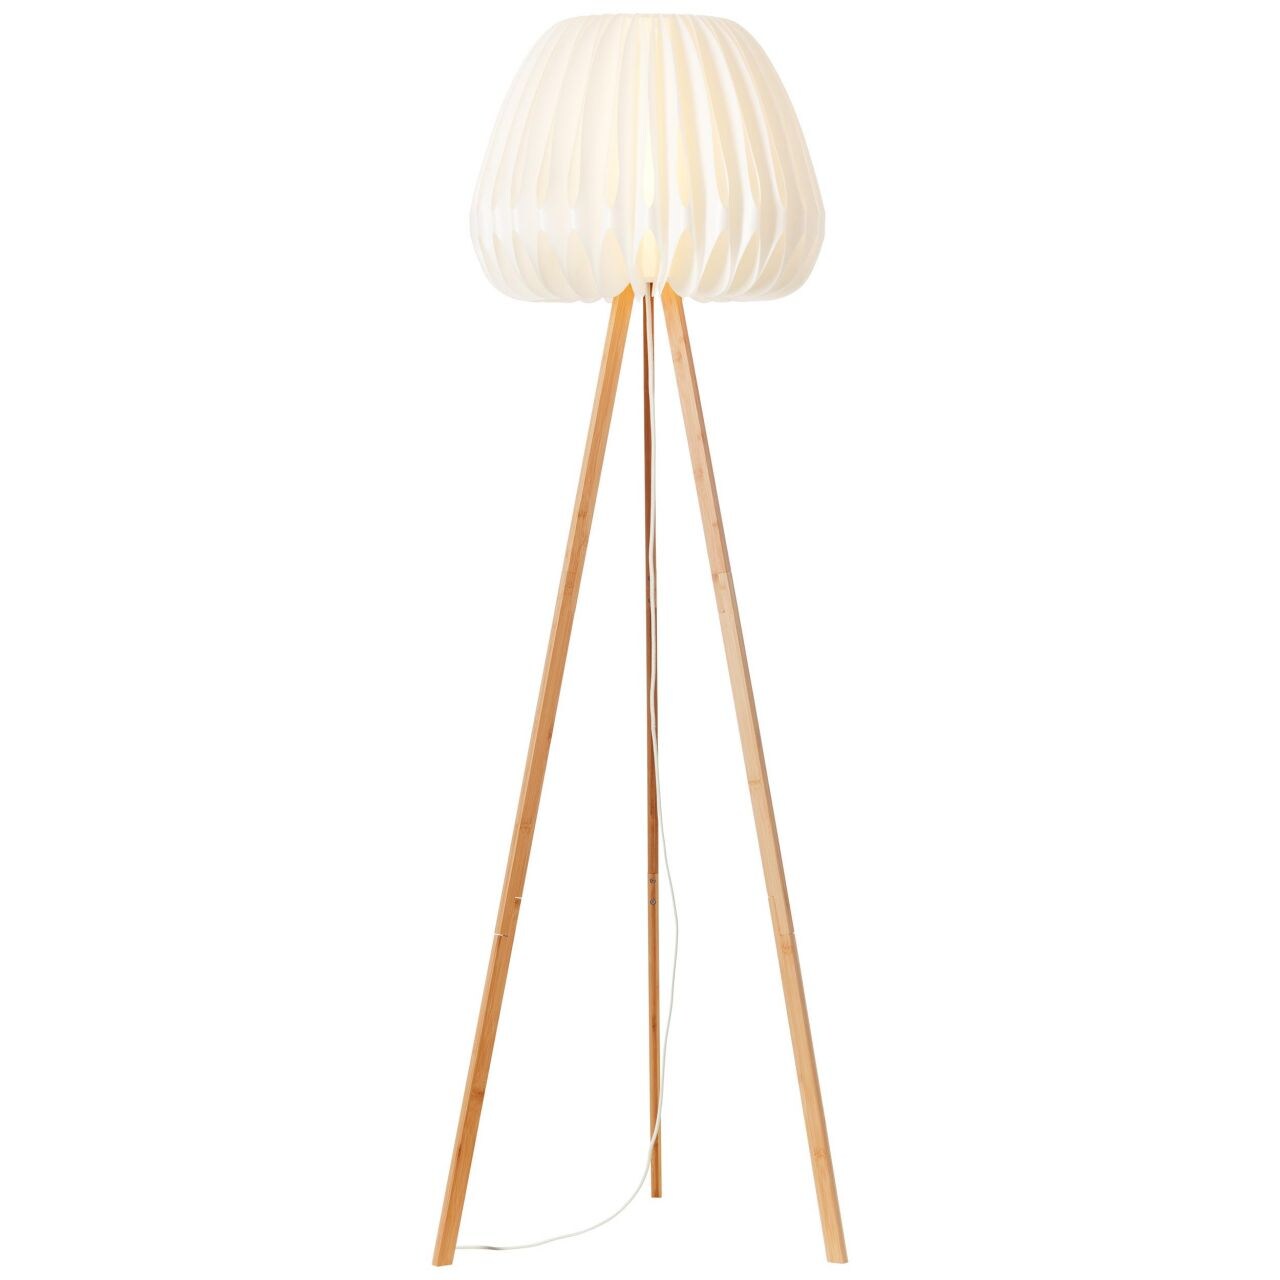 BRILLIANT Lampe, Inna Standleuchte, dreibeinig holz hell/weiß, Bambus/Kunststoff, 1x A60, E27, 60W,Normallampen (nicht e